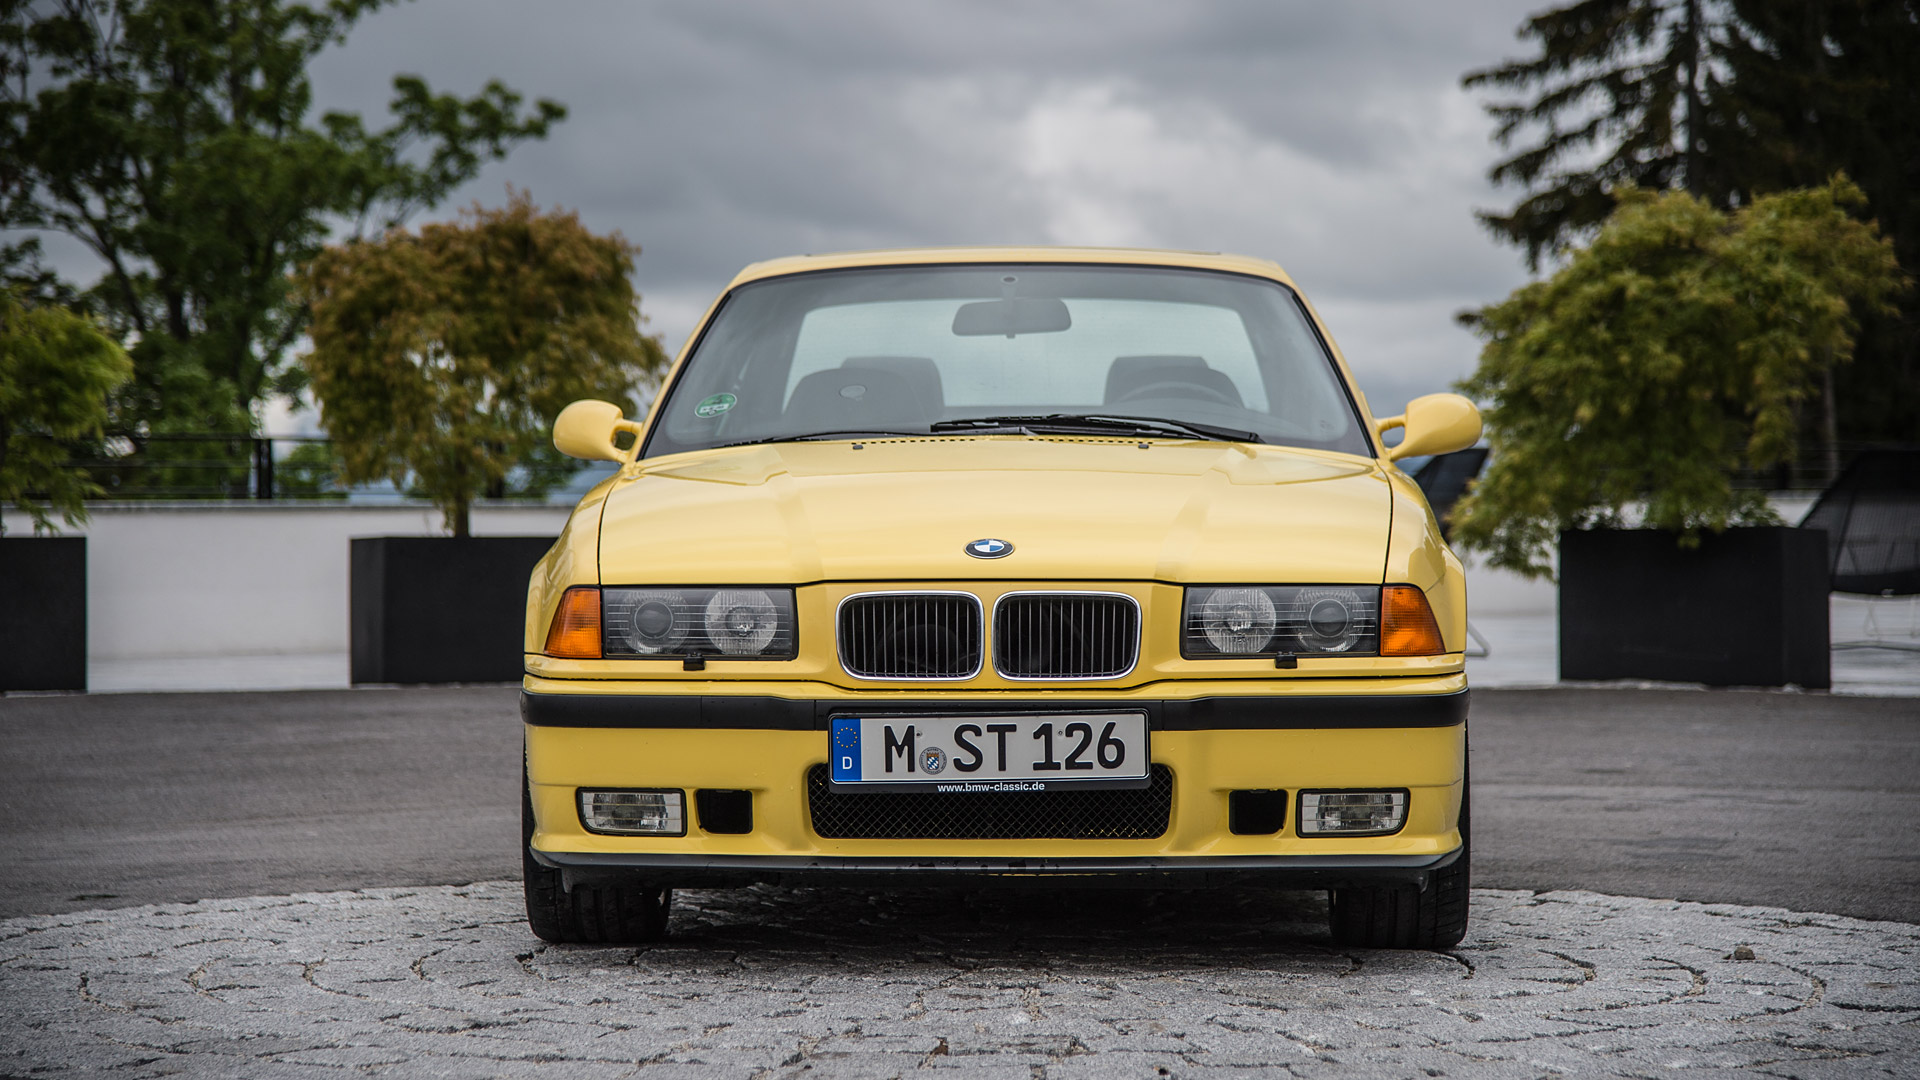  1992 BMW M3 Coupe Wallpaper.